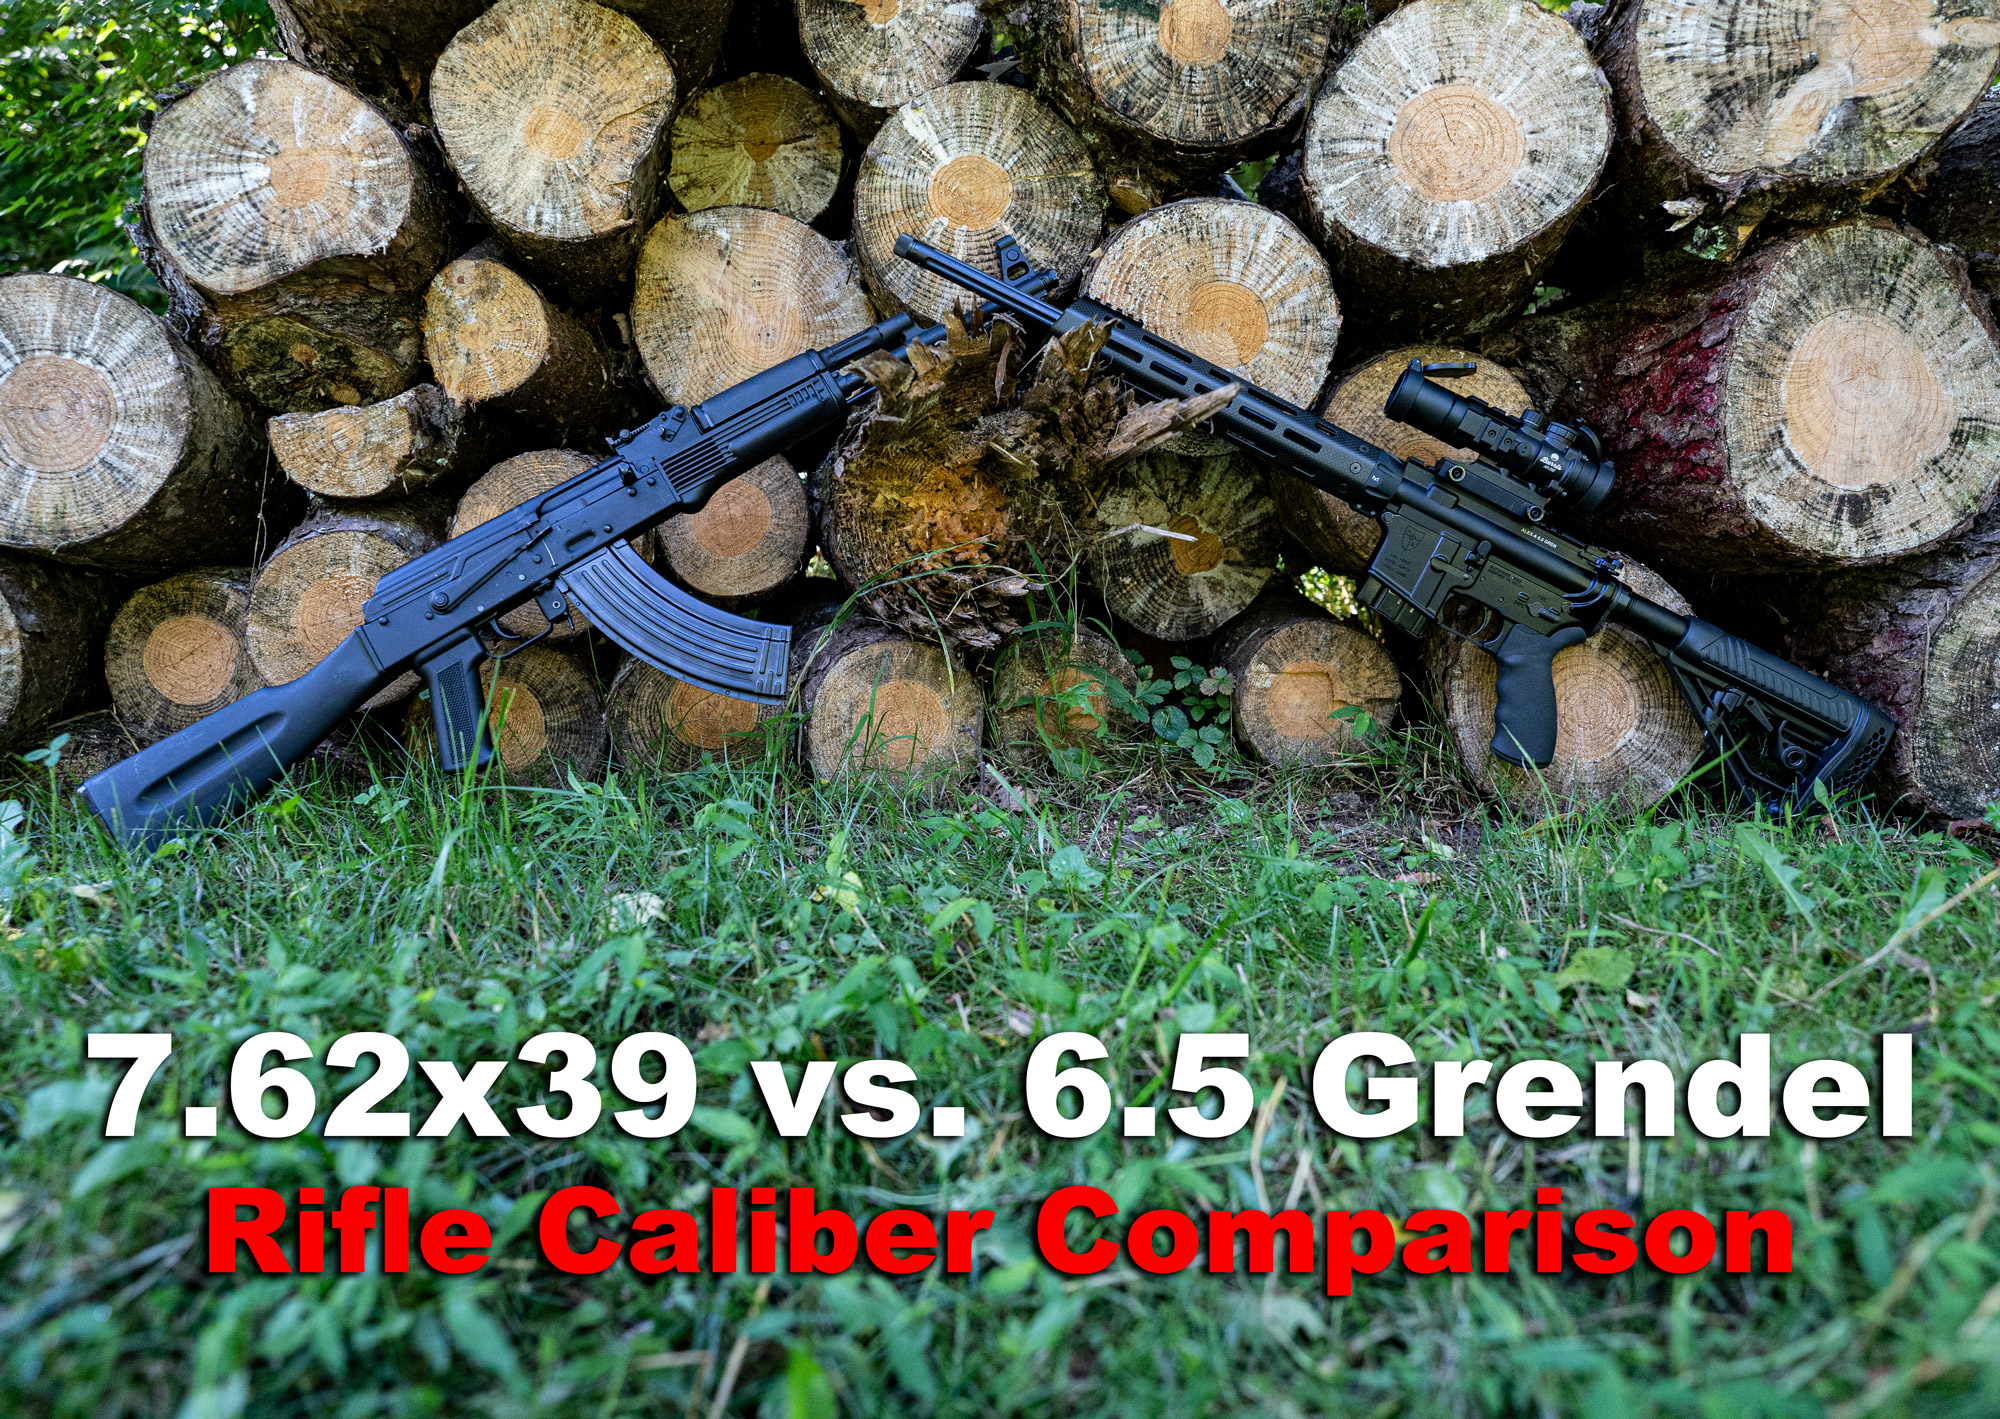 7.62x39 vs 6.5 Grendel rifle calibers